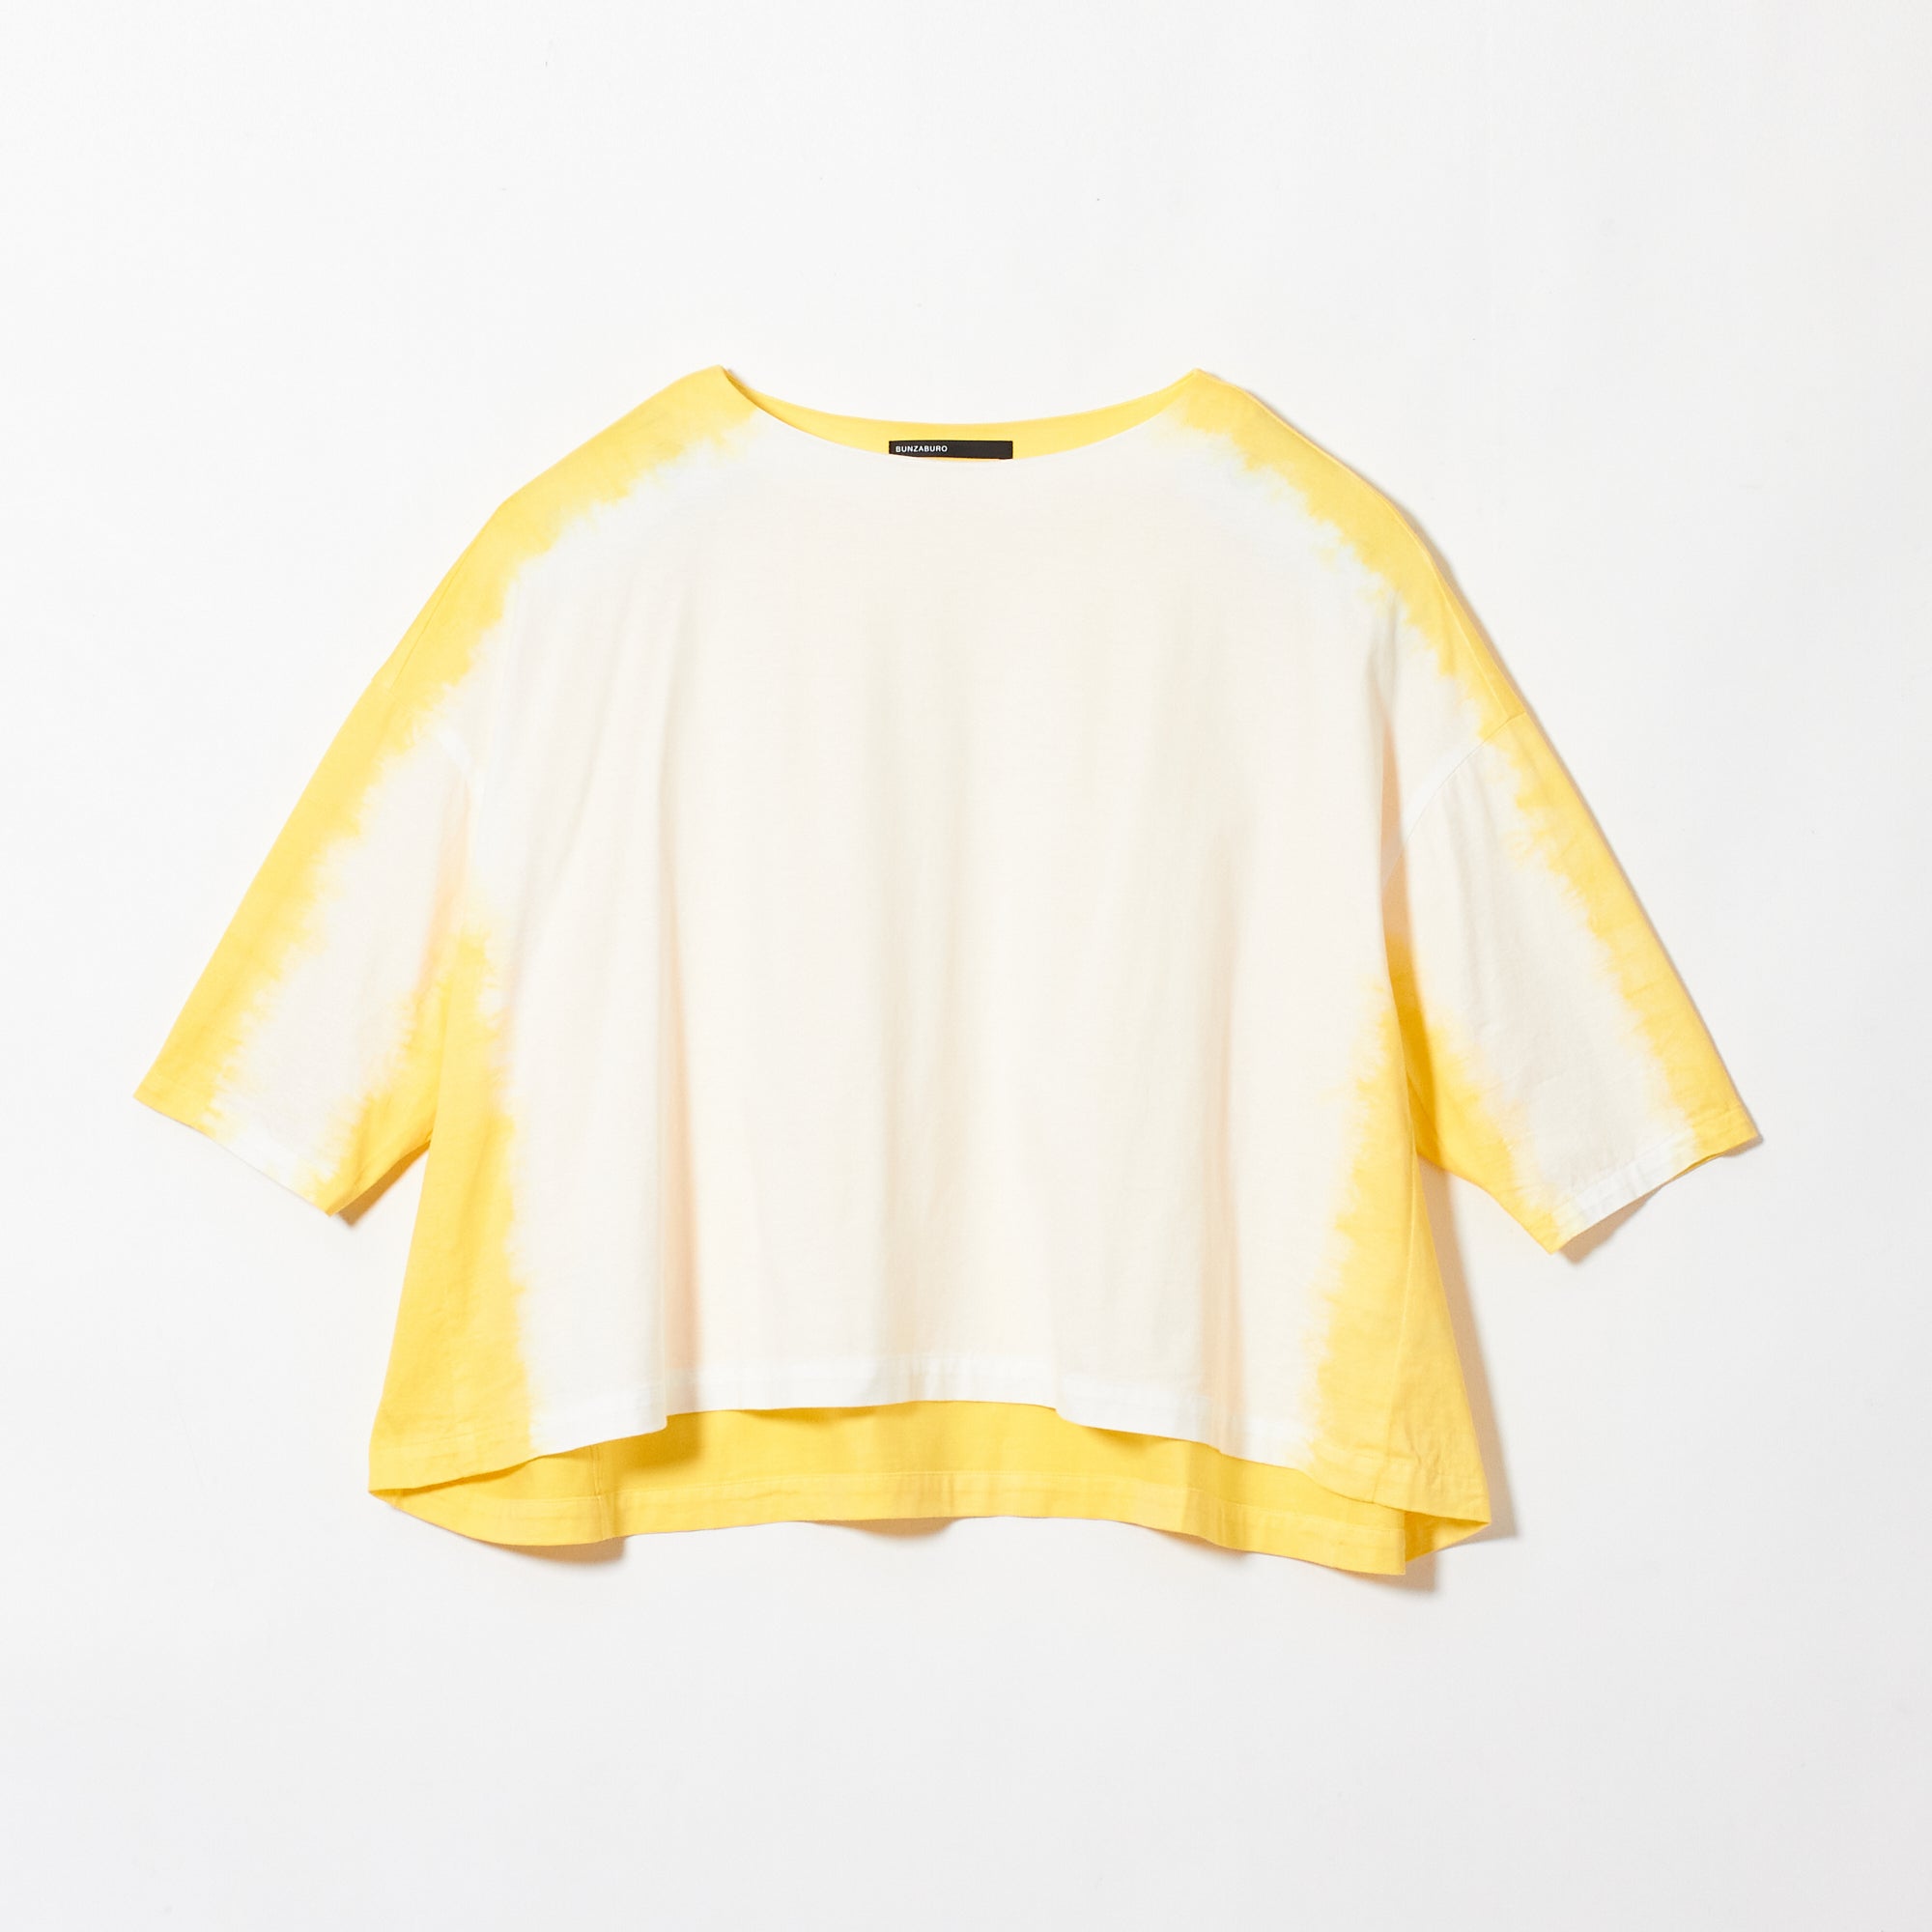 Licht Bestreben side zip expand shirt 9000円引き